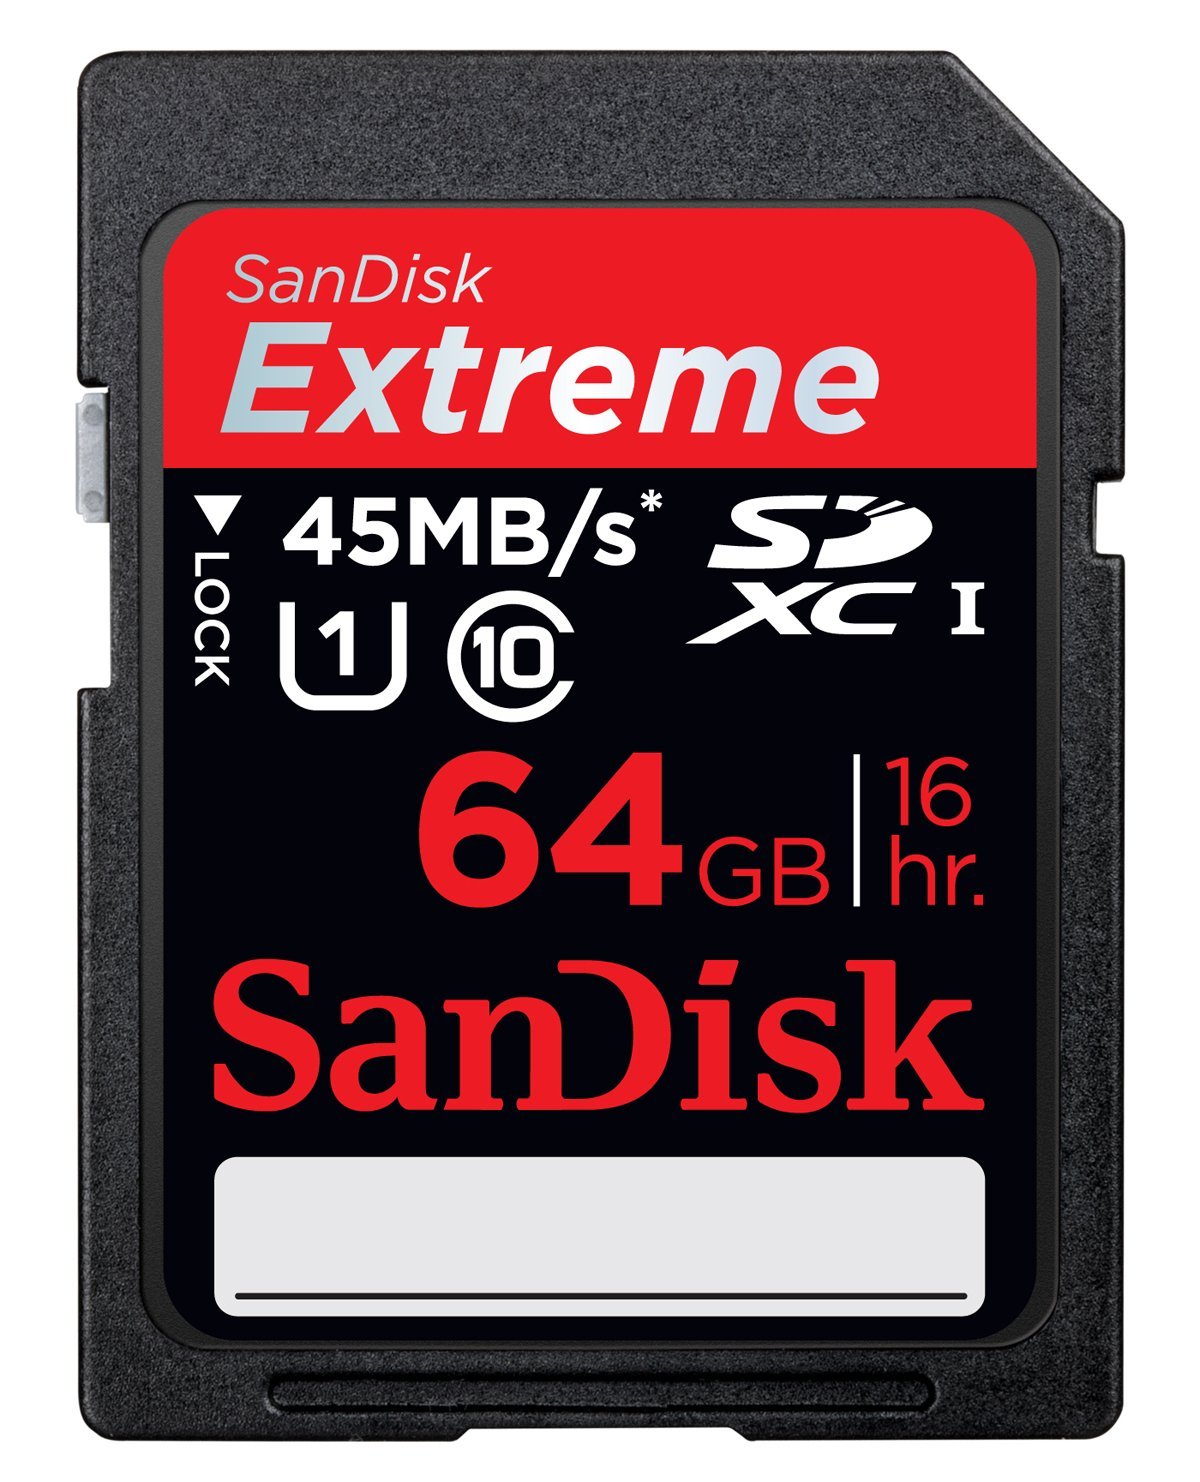 SanDisk Extreme 64 GB SDXC Clase 10 UHS-1 memoria Flash tarjeta